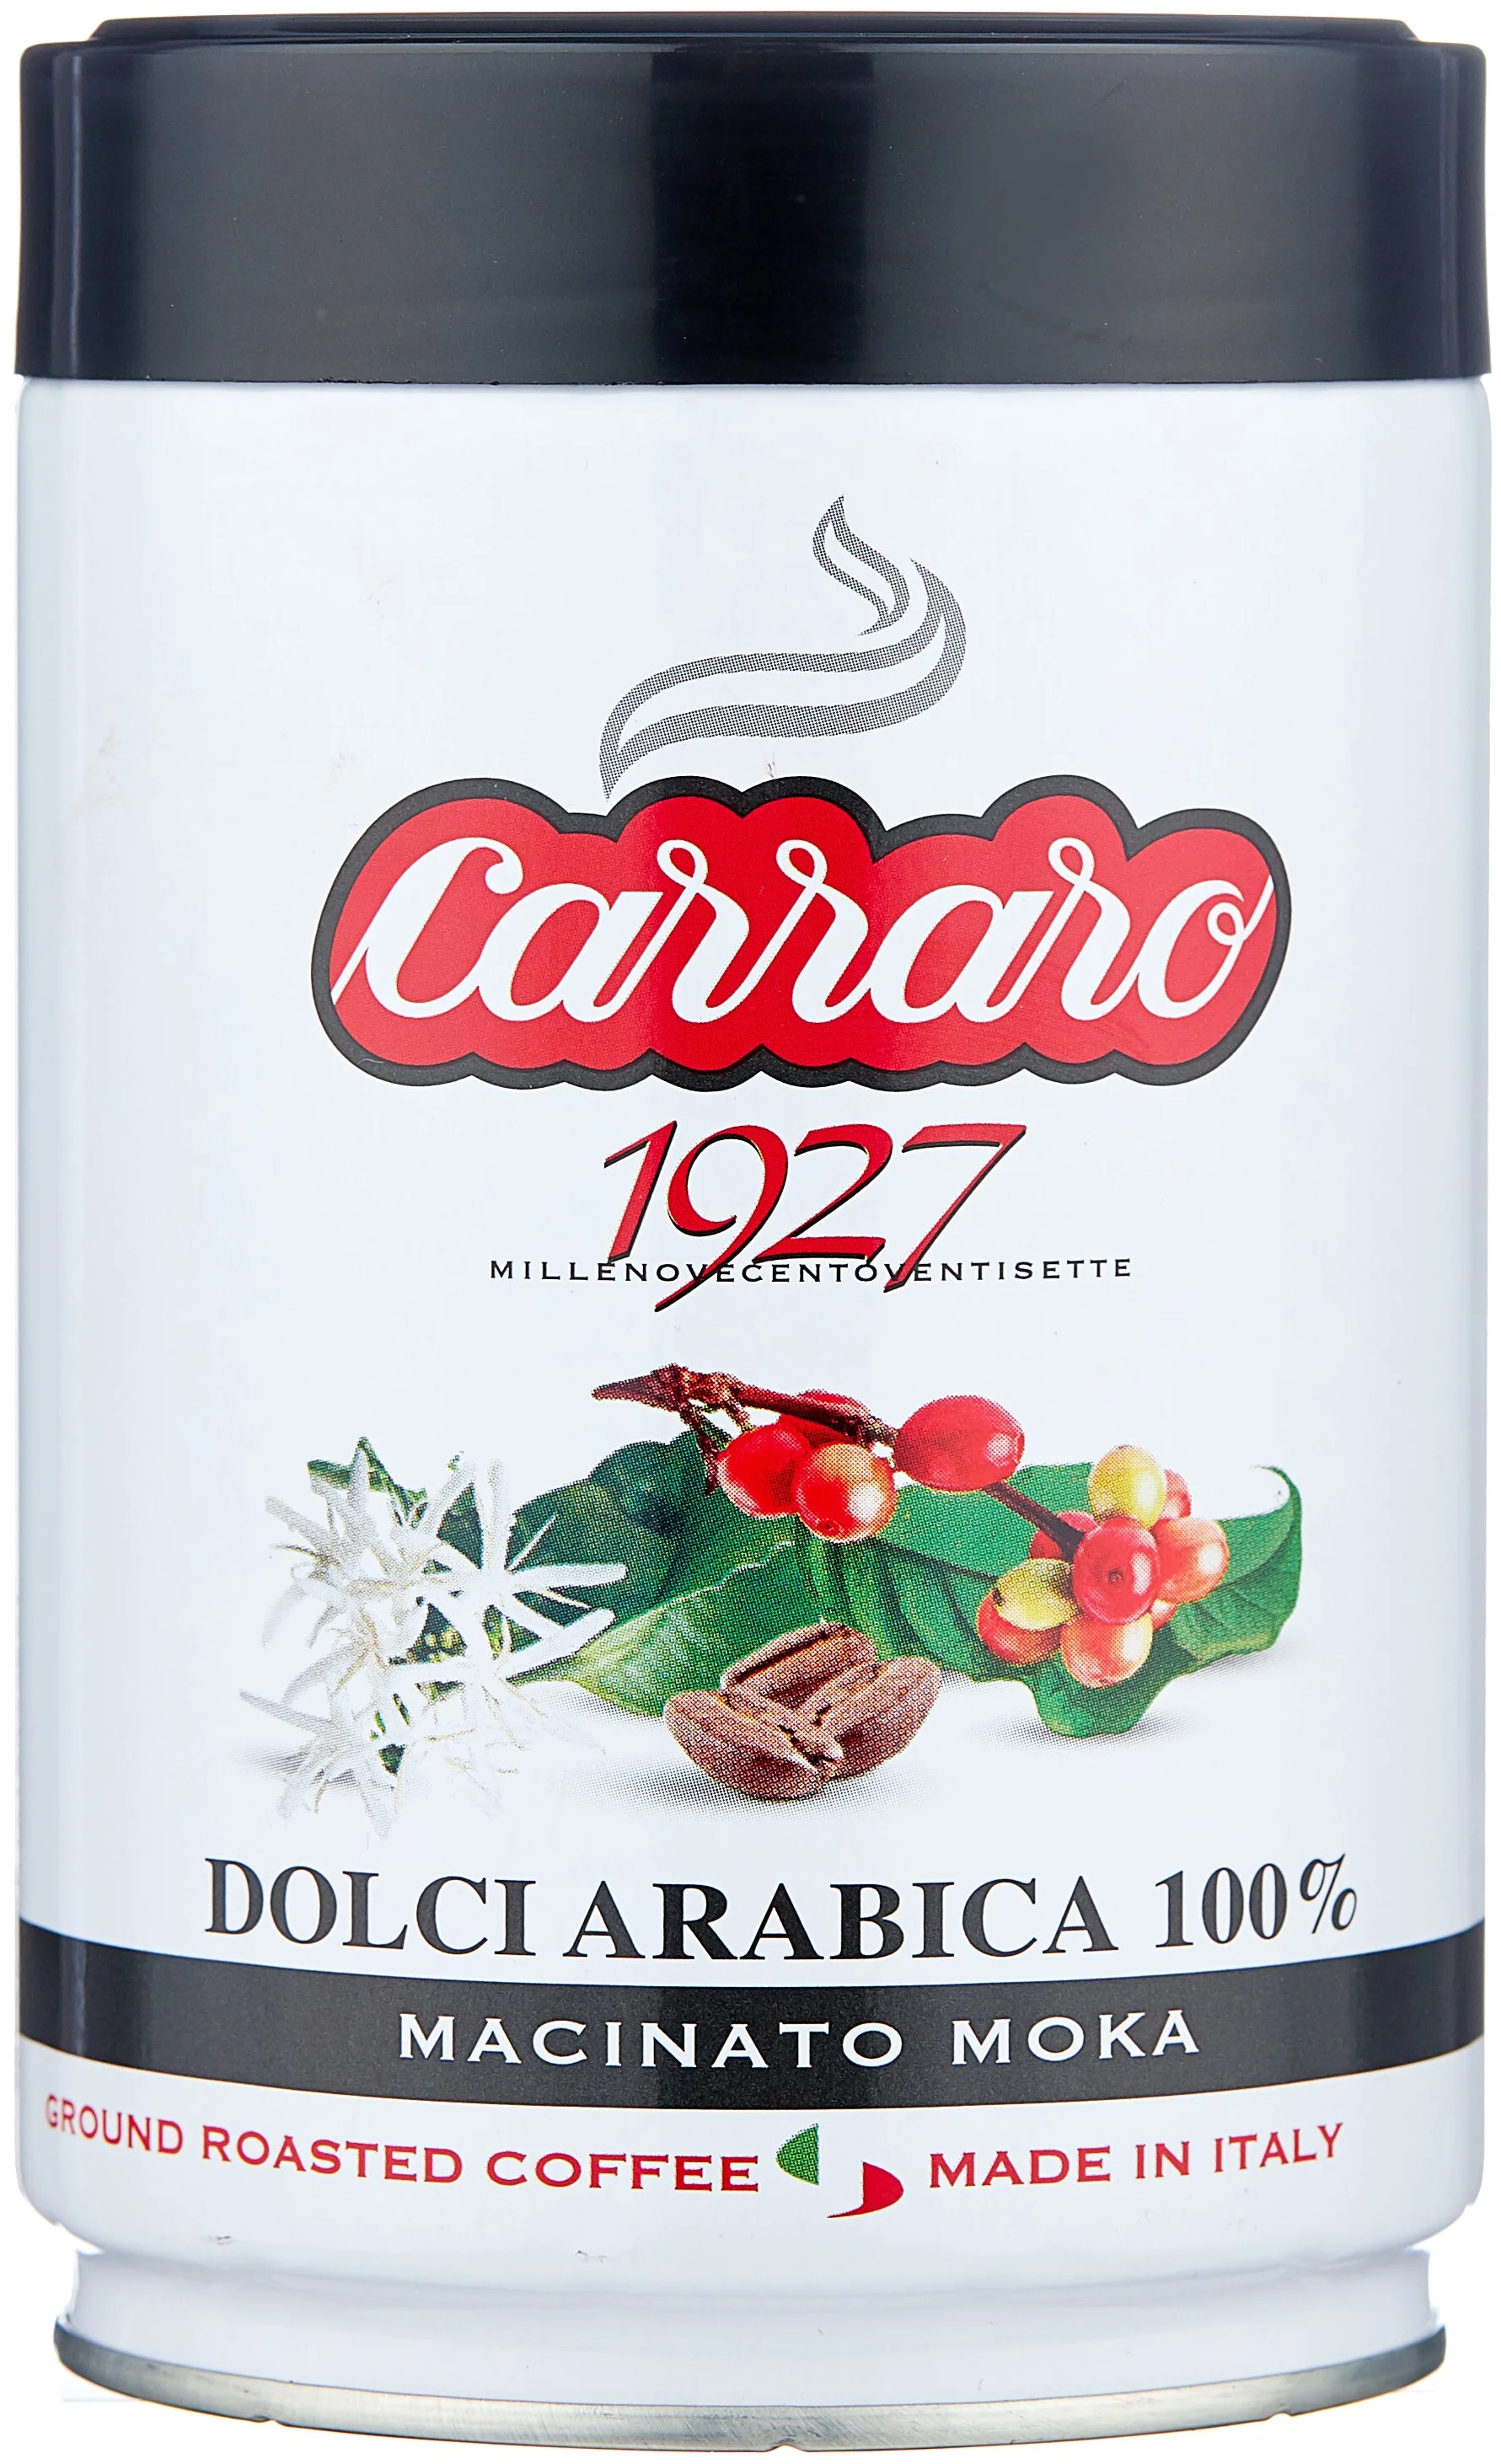 Carraro Dolci Arabica - вид зерен: арабика